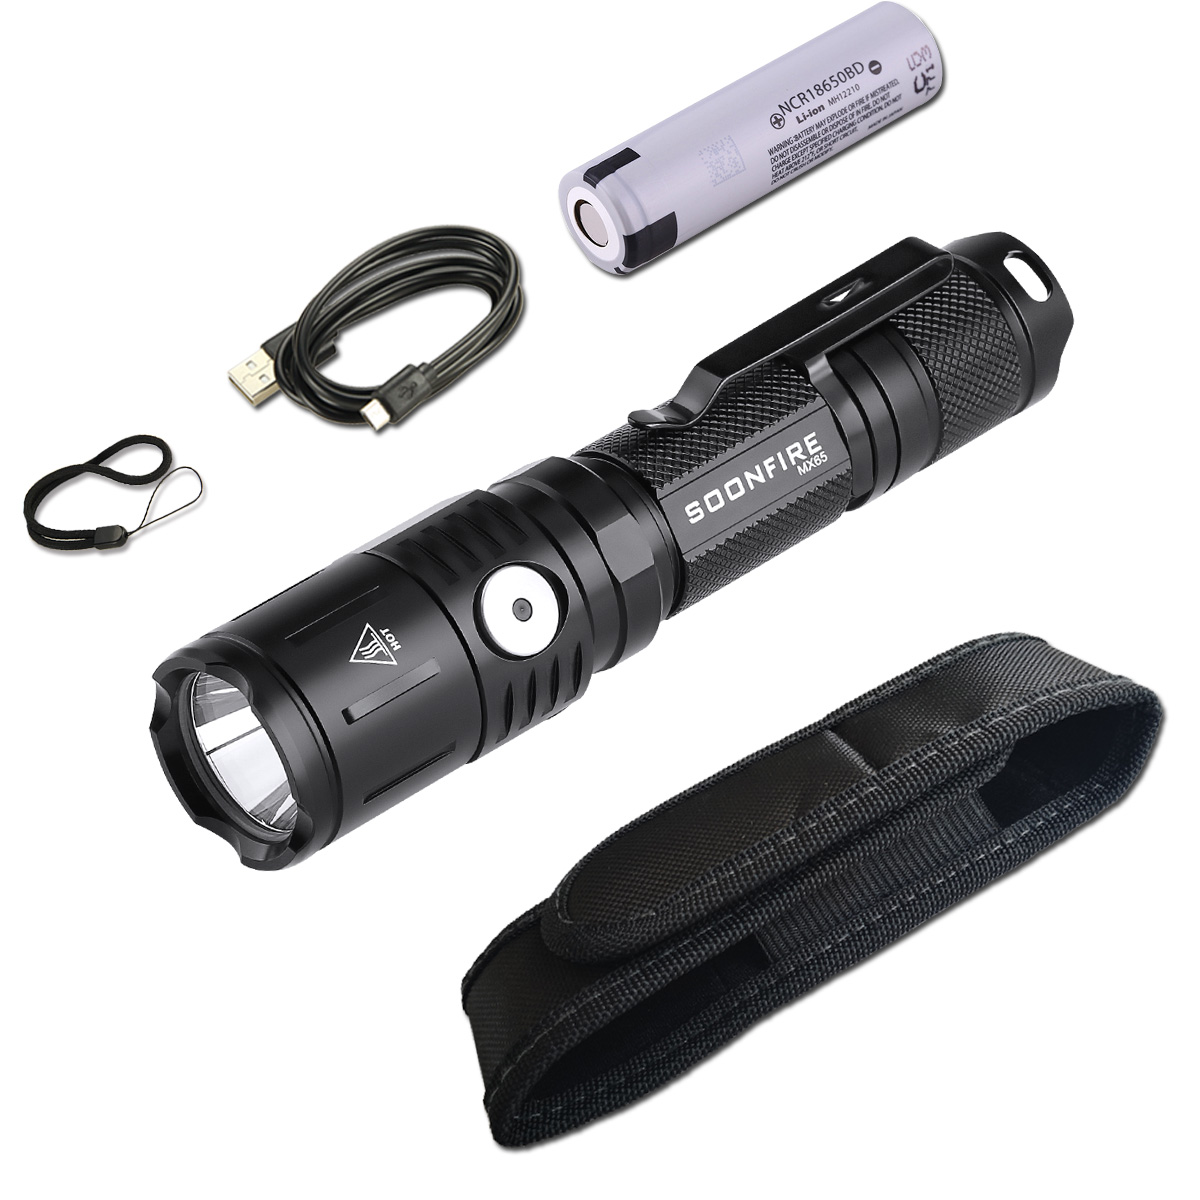 Soonfire DS30 Tactical Flashlight